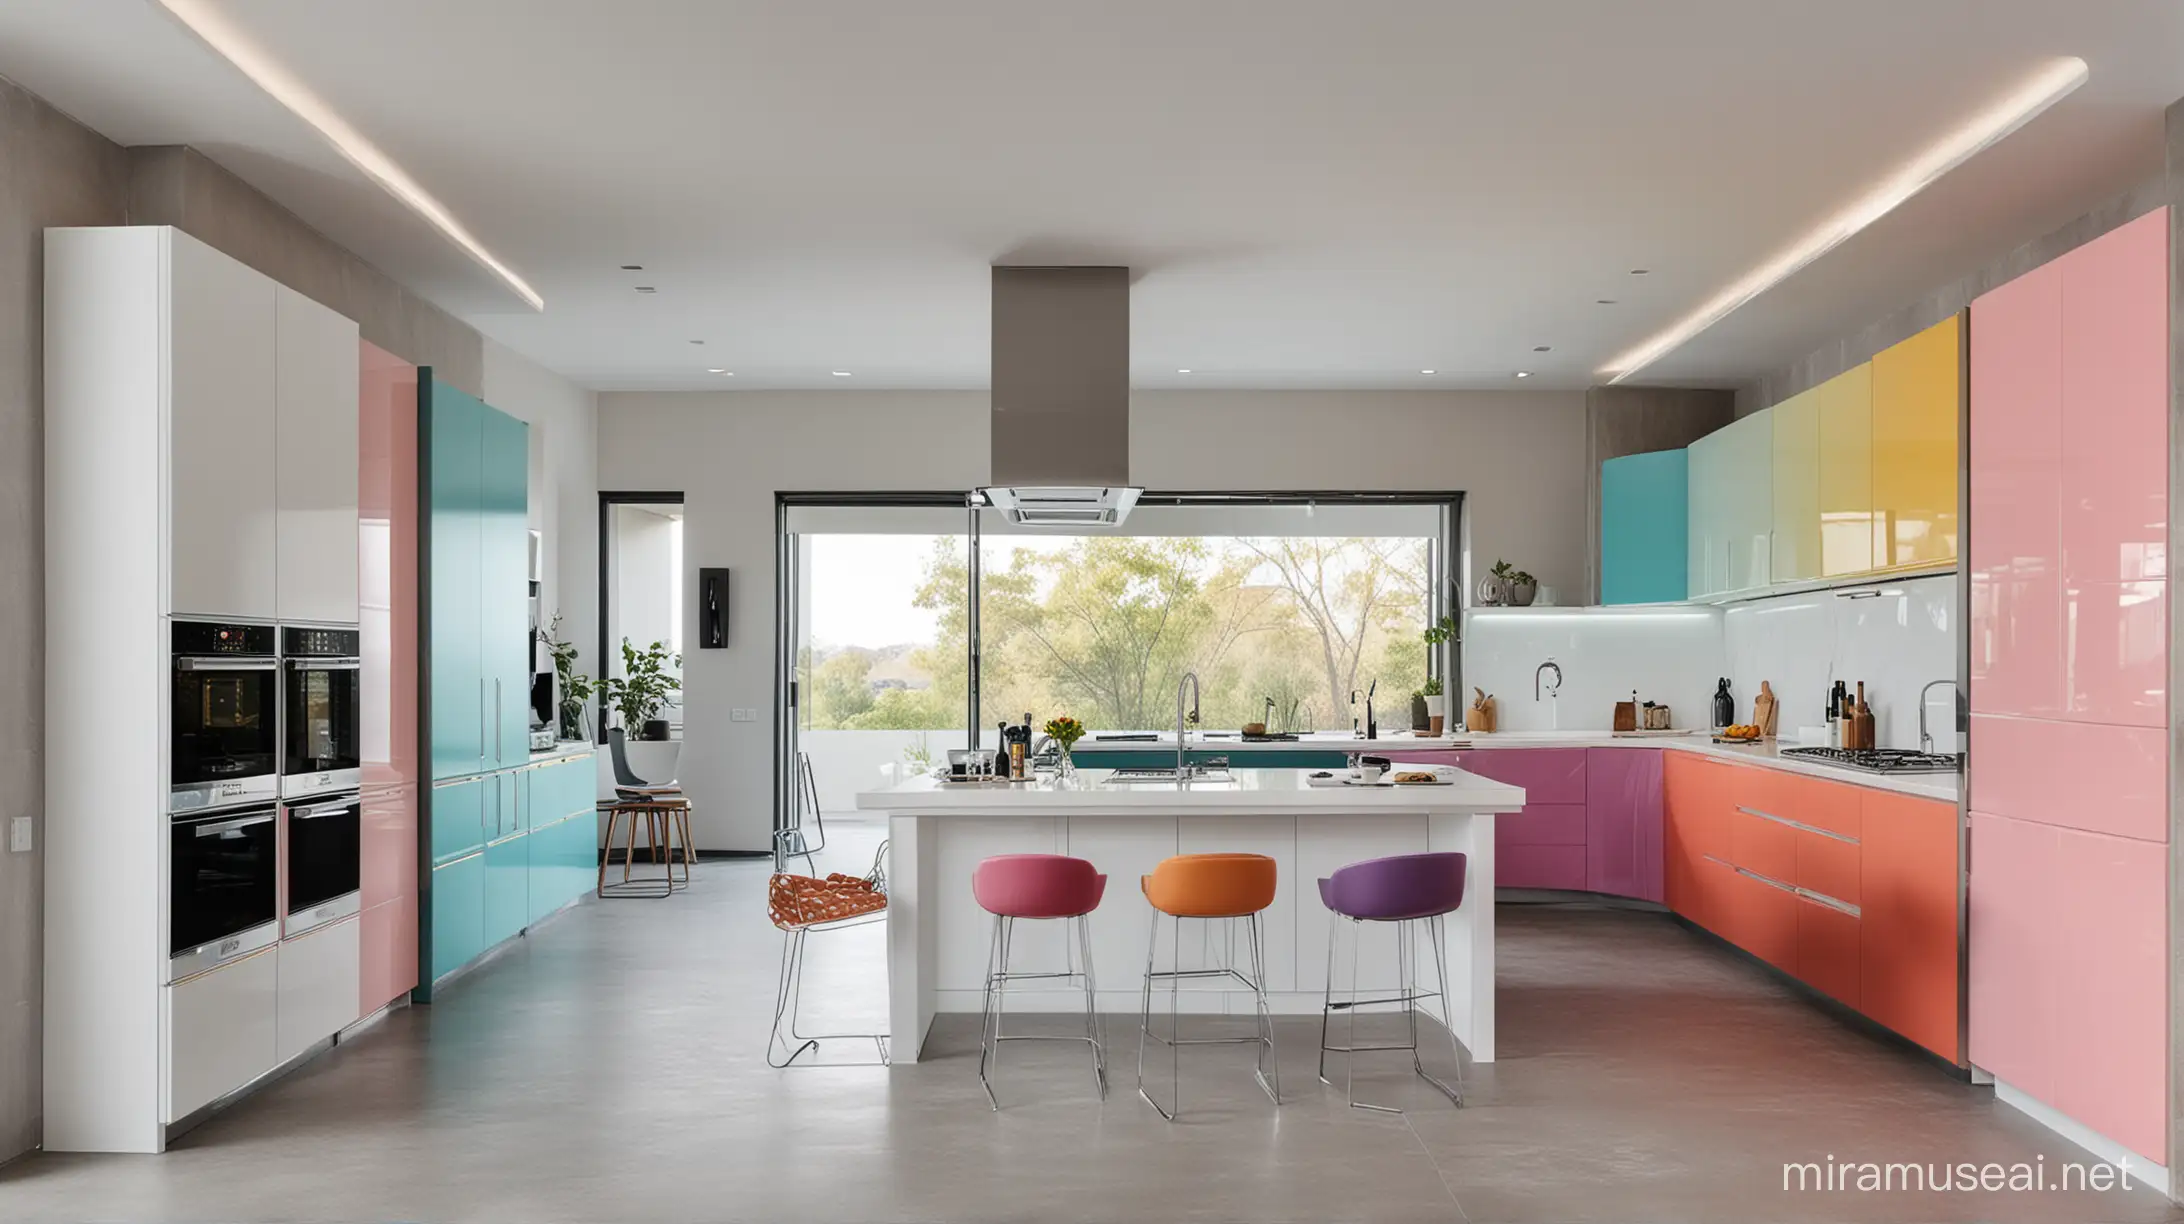 Futuristic modern Kitchen space with multicolored Cabinets